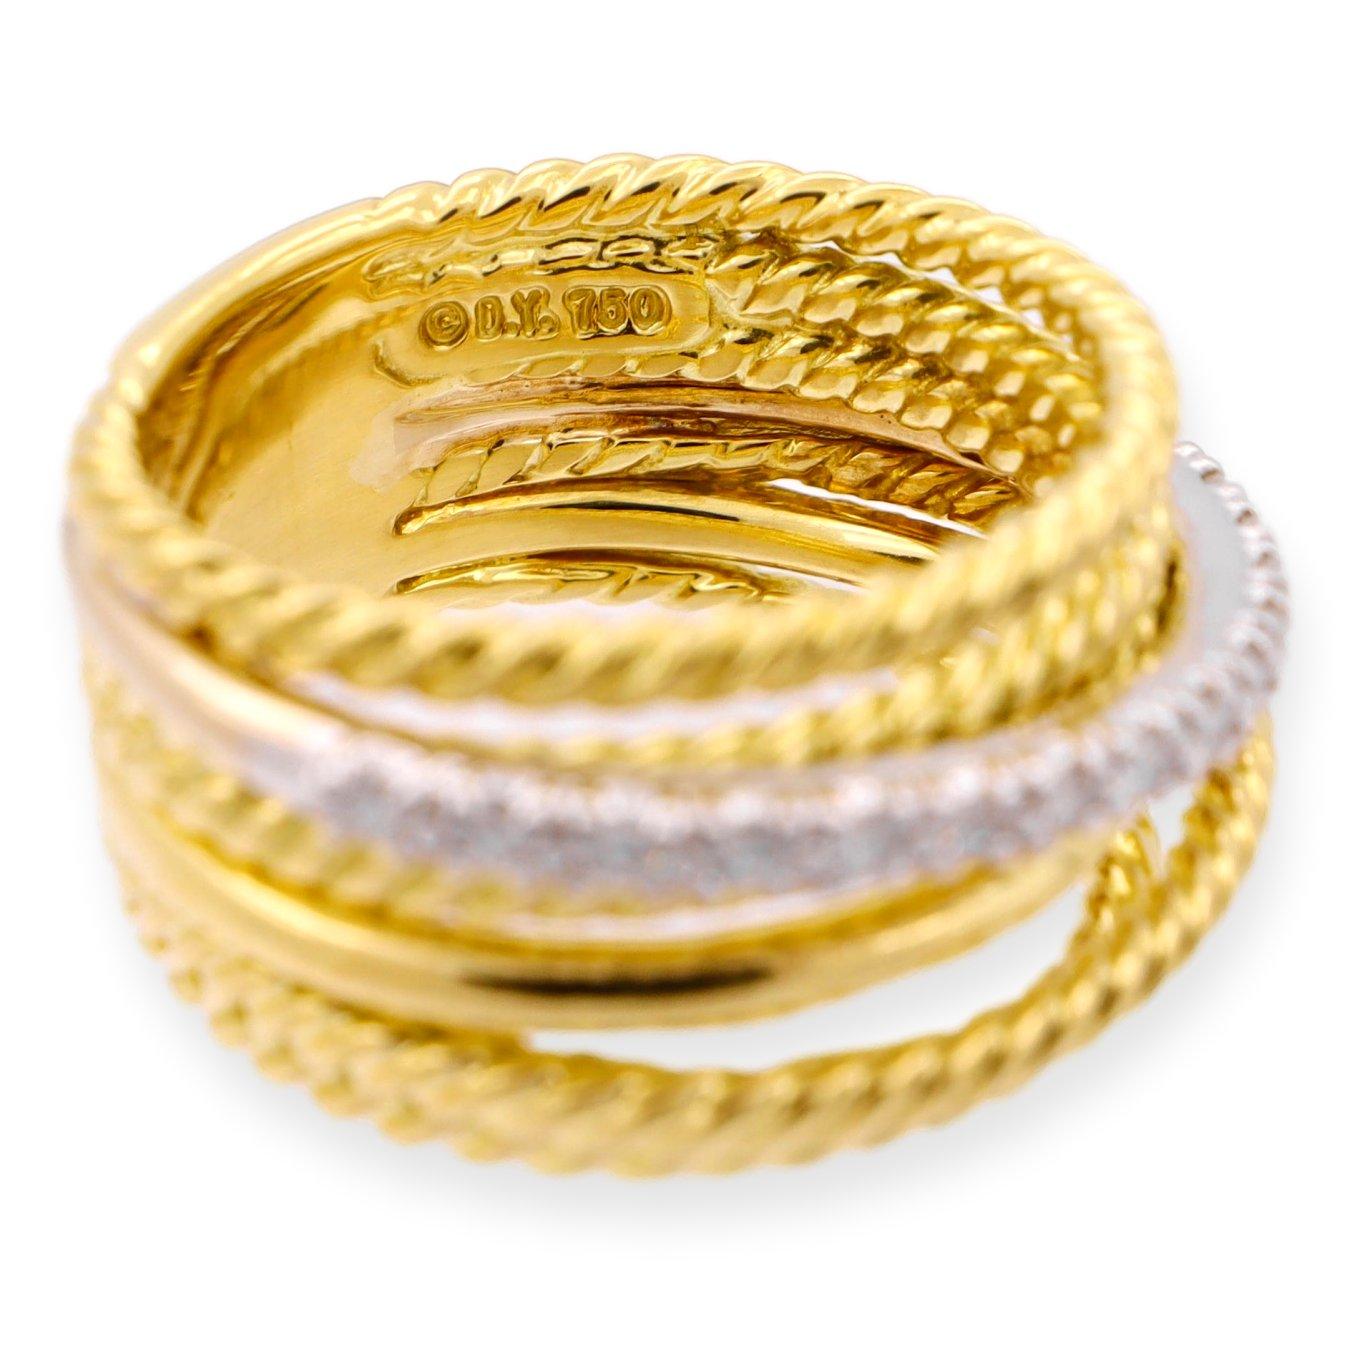 Brilliant Cut David Yurman 18K Yellow Gold Diamond Crossover Wide Band Ring Size 6